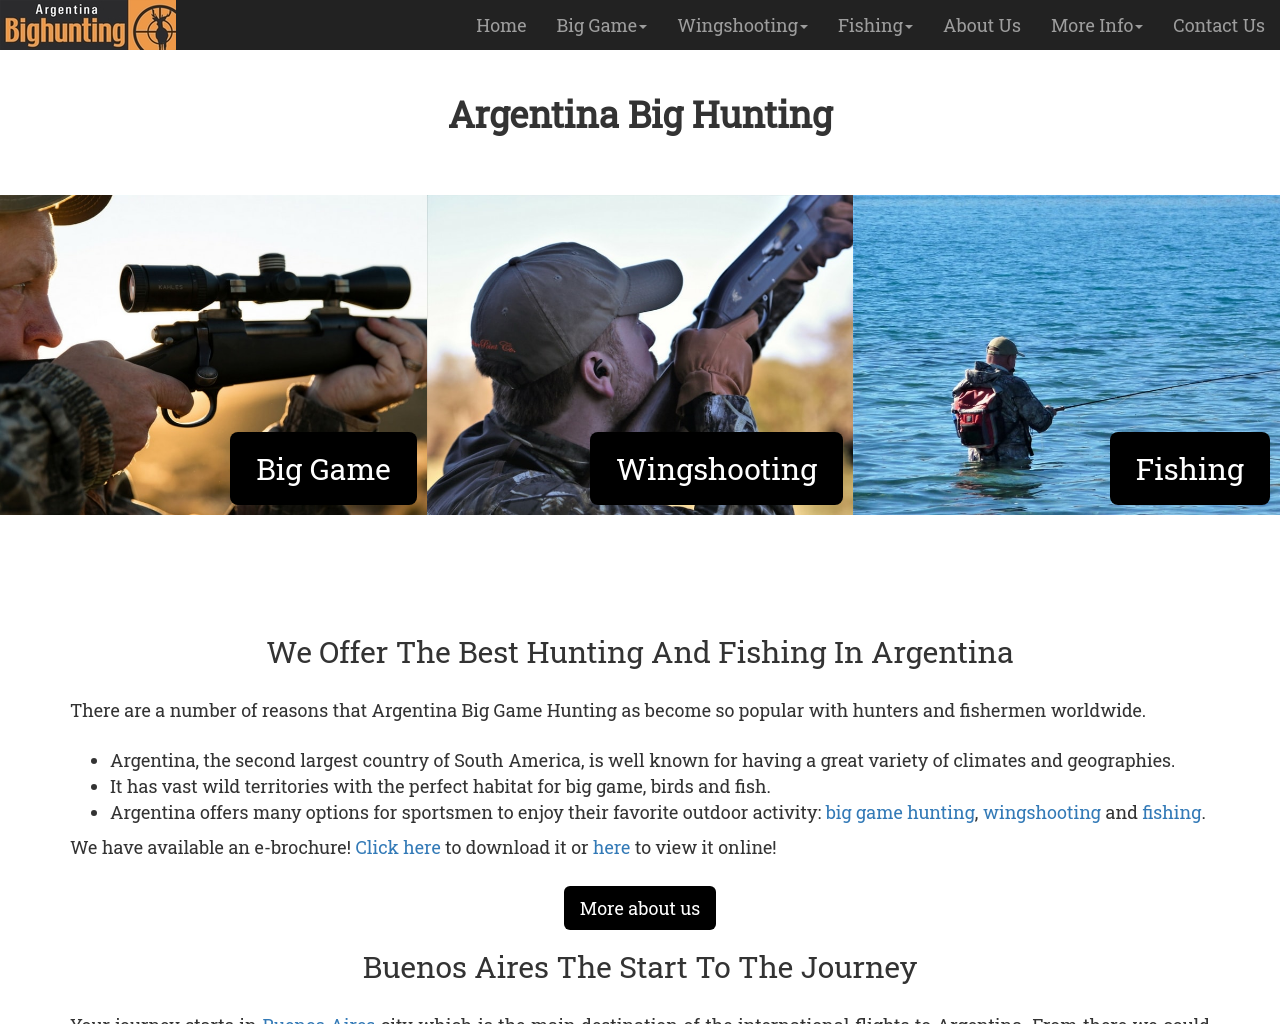 argentinabighunting.com